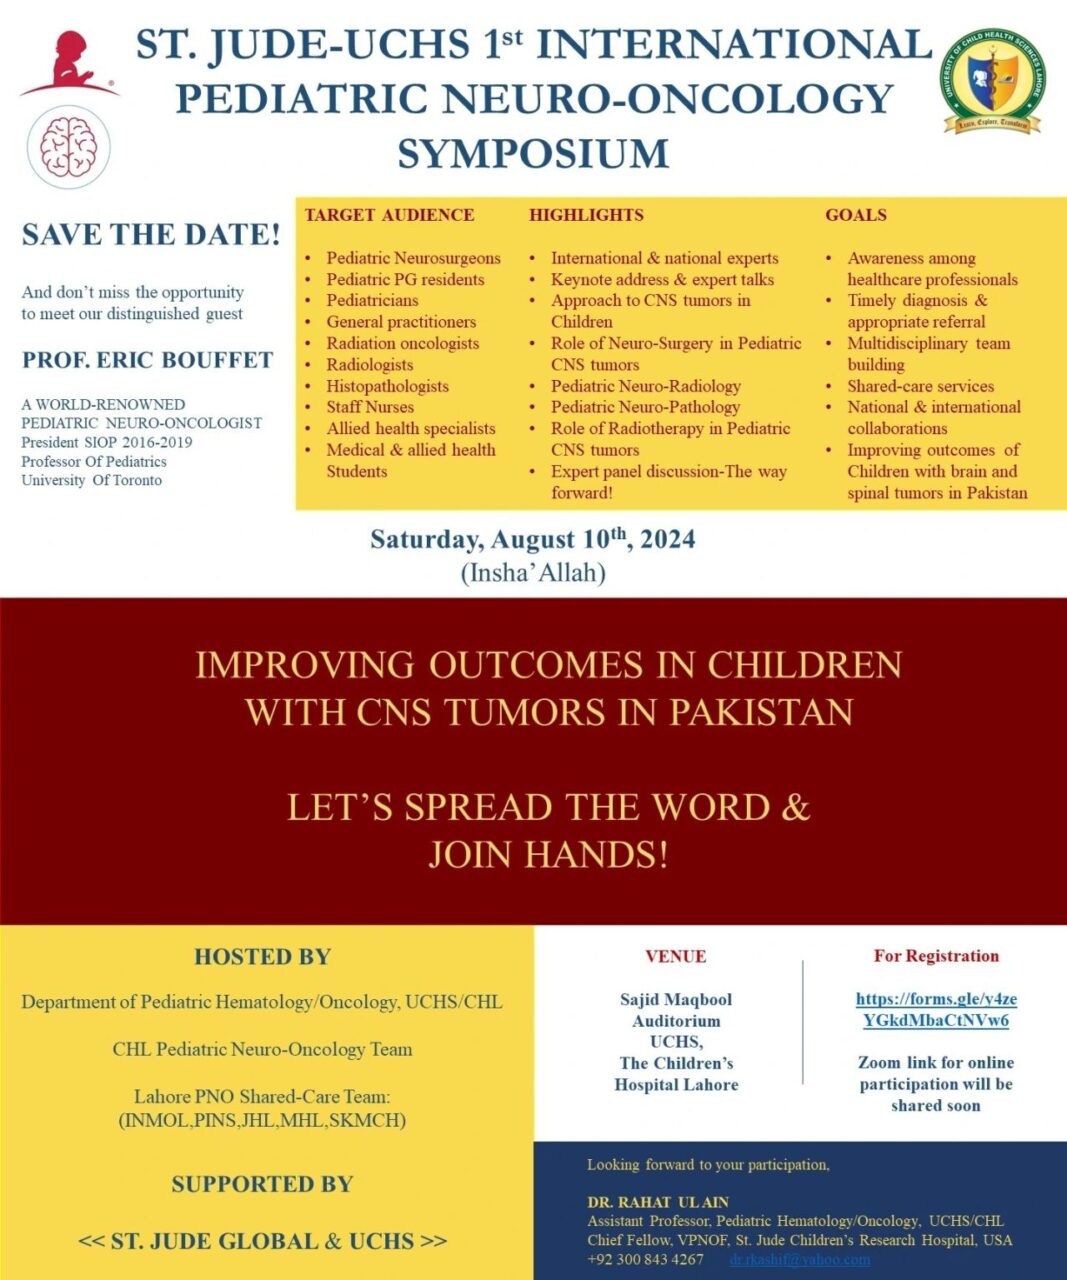 Rahat Ul Ain: St. Jude-UCHS first international pediatric neuro-oncology symposium